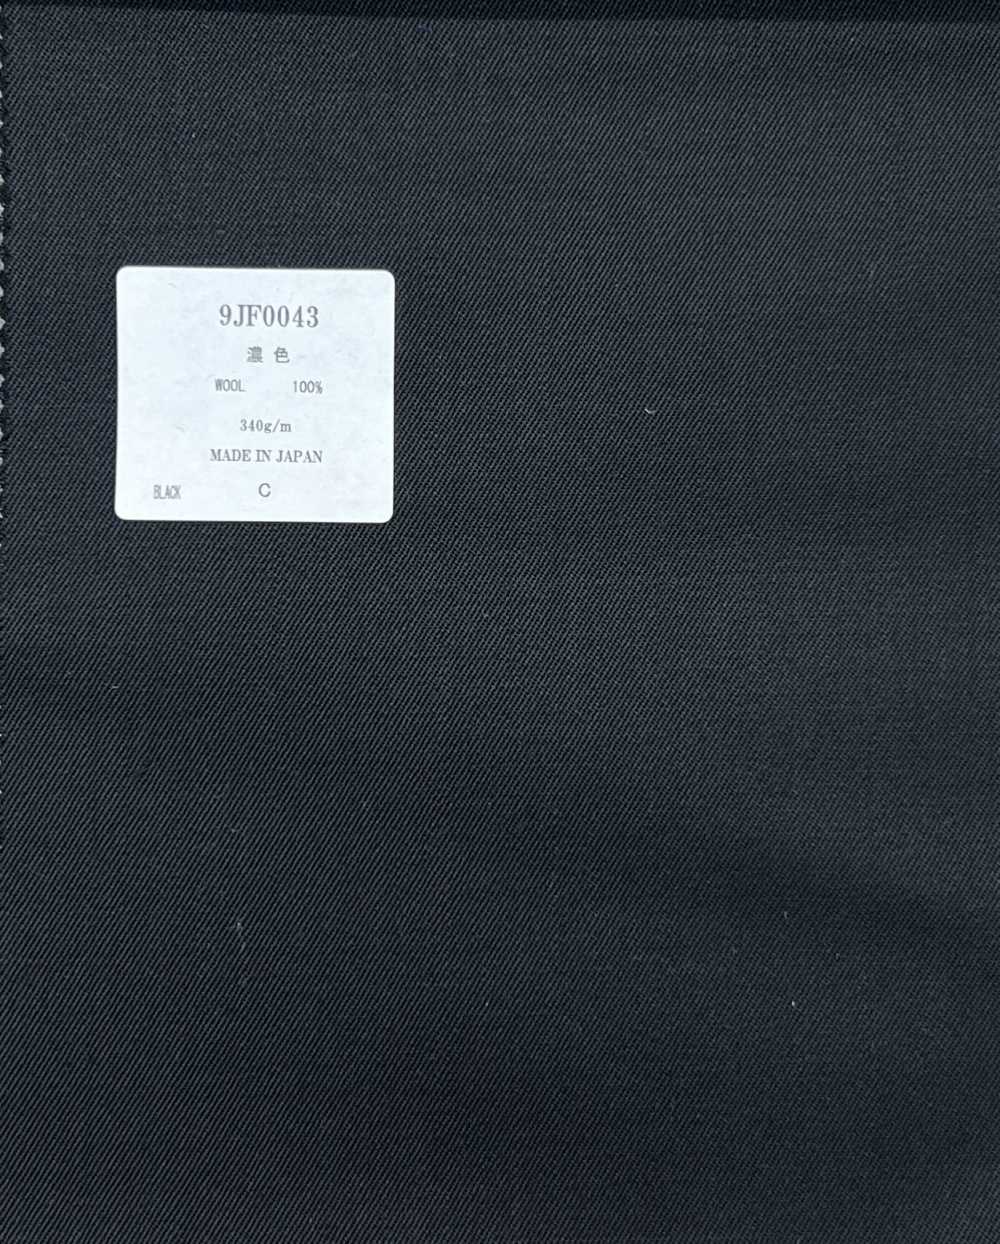 9JF0043 STOFF HERGESTELLT IN JAPAN[Textil]